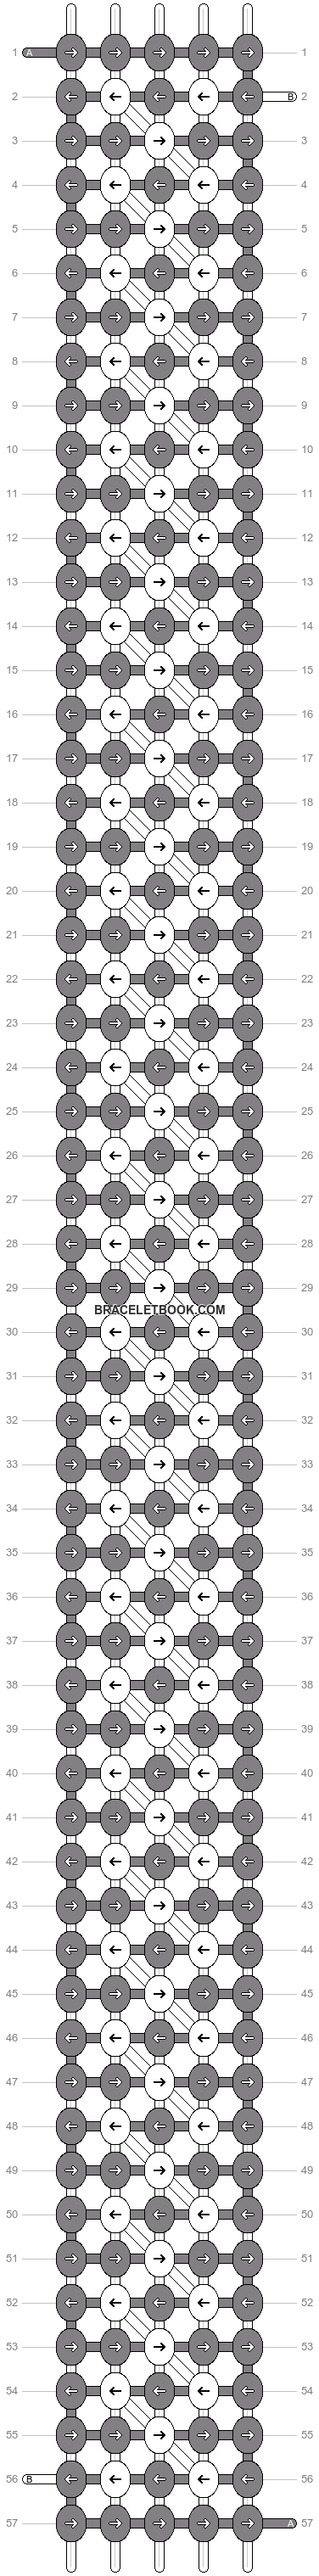 Alpha pattern #7262 pattern